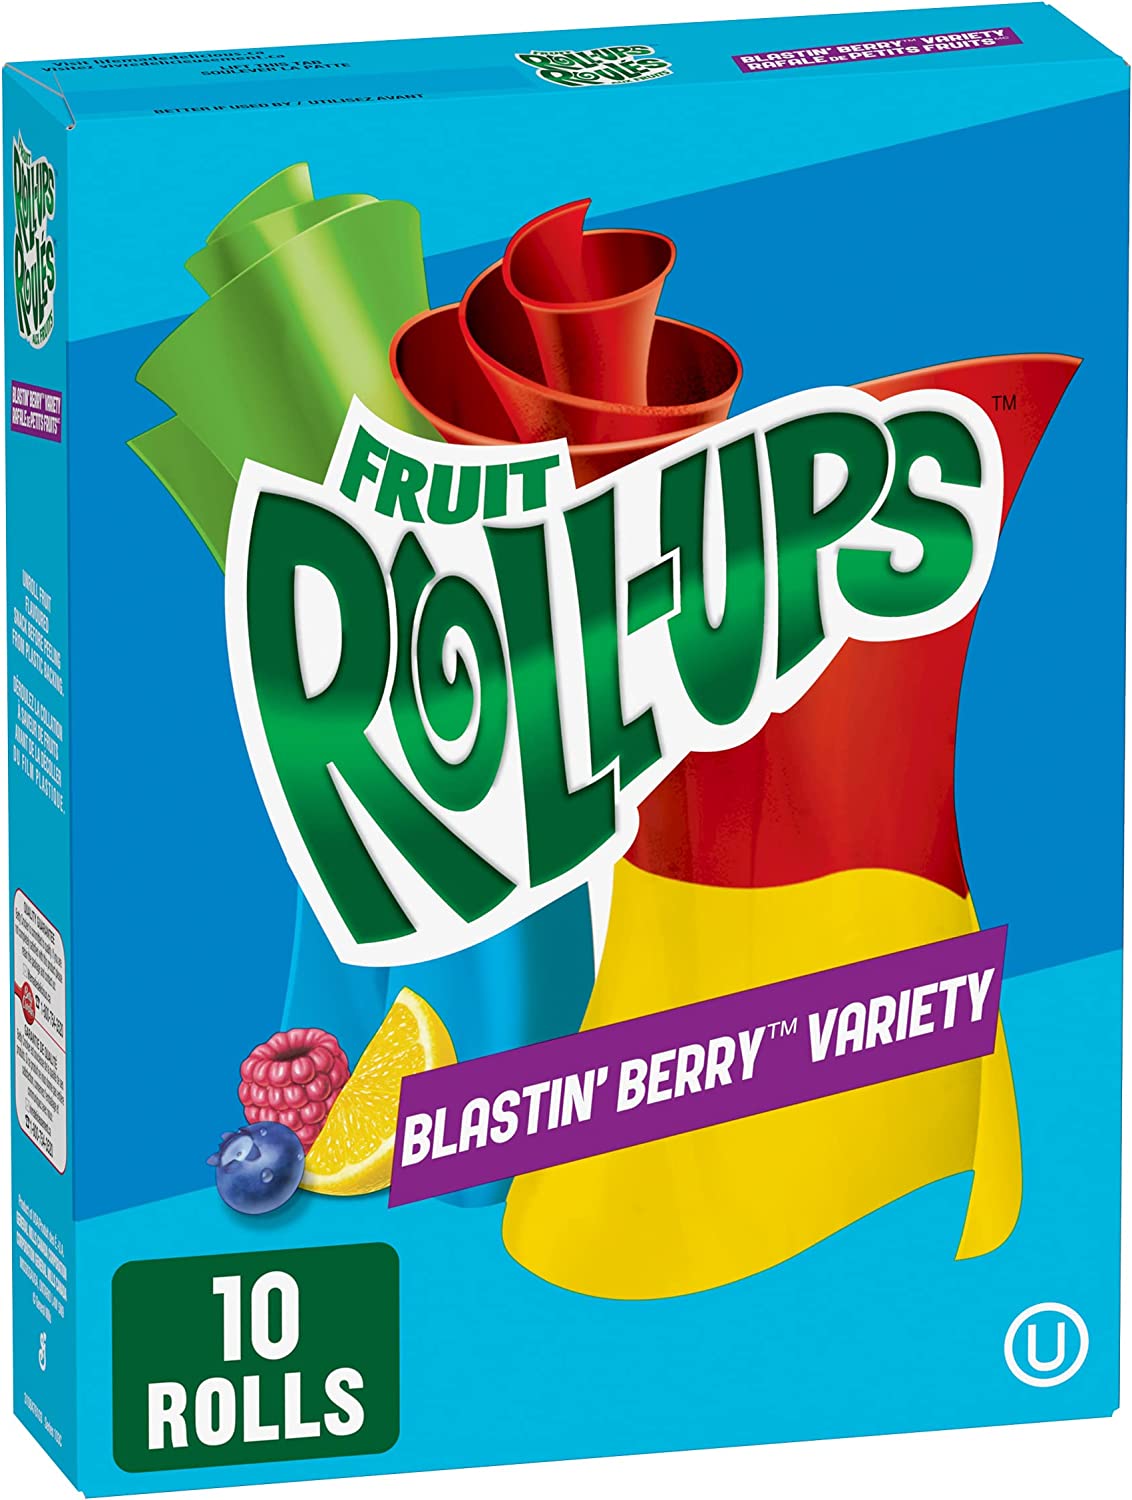 Fruit Roll Ups Blastin’ Berry Variety, 10 Count